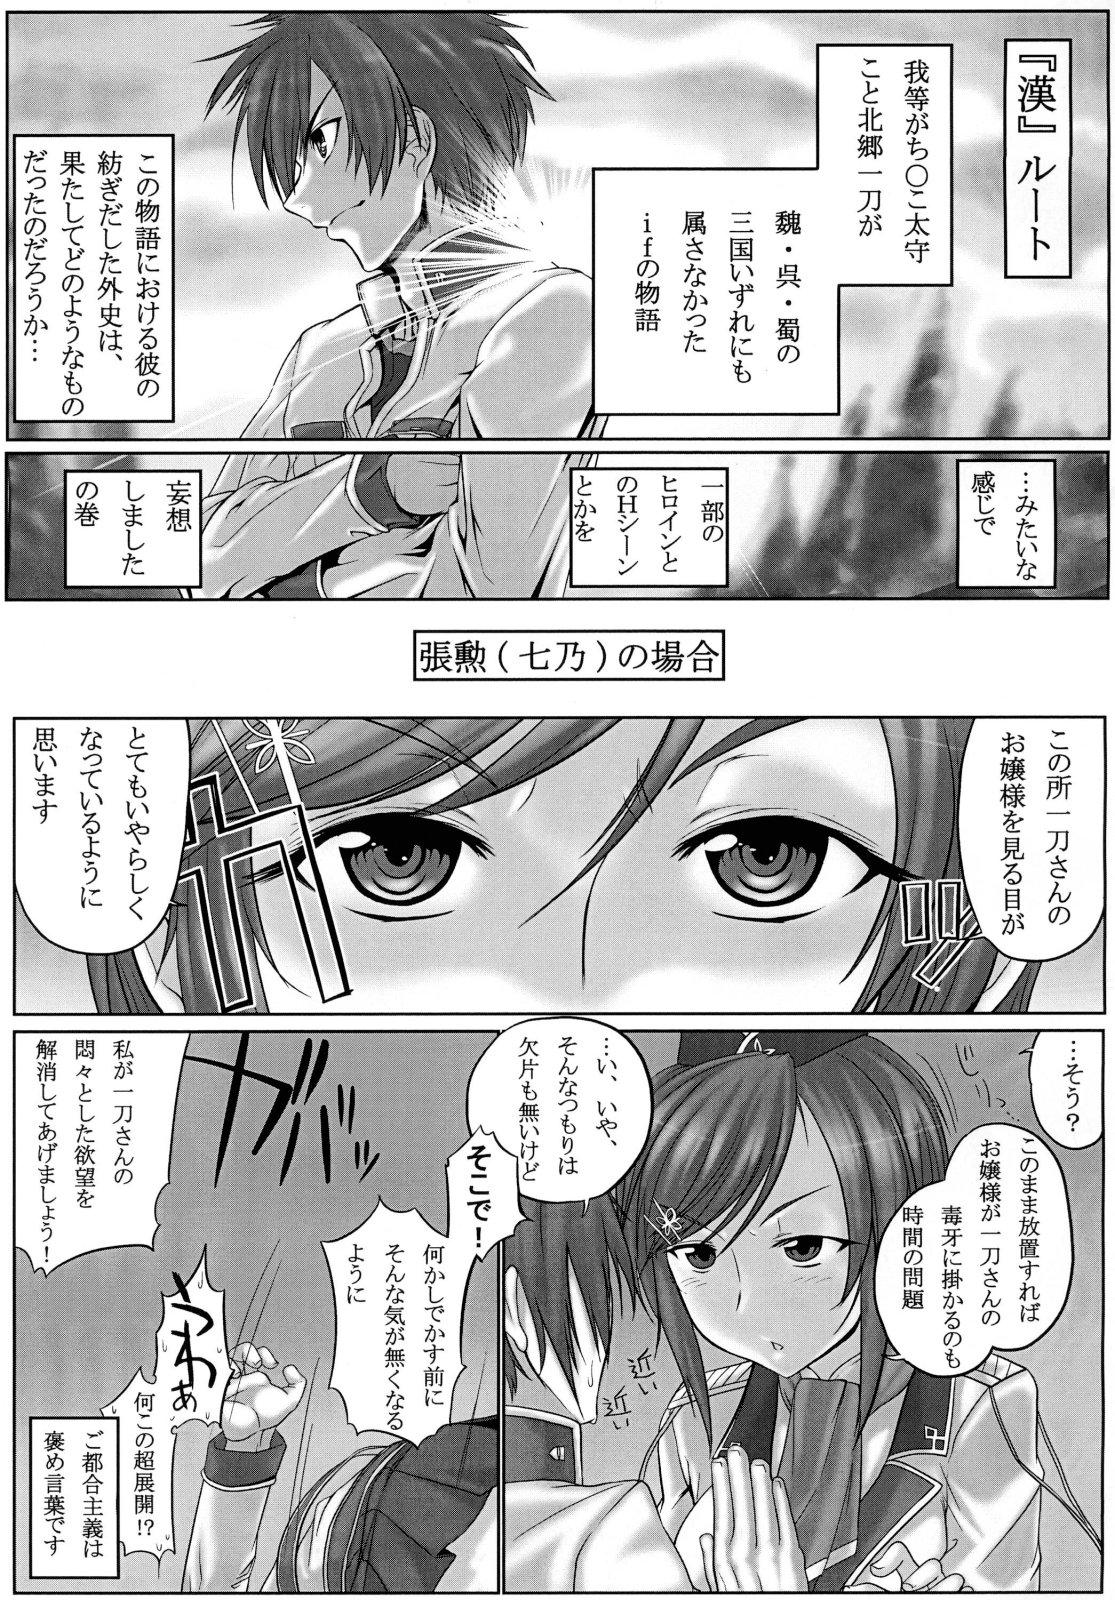 Babysitter Shin Koihime † Masaka no Choice - Koihime musou New - Page 5